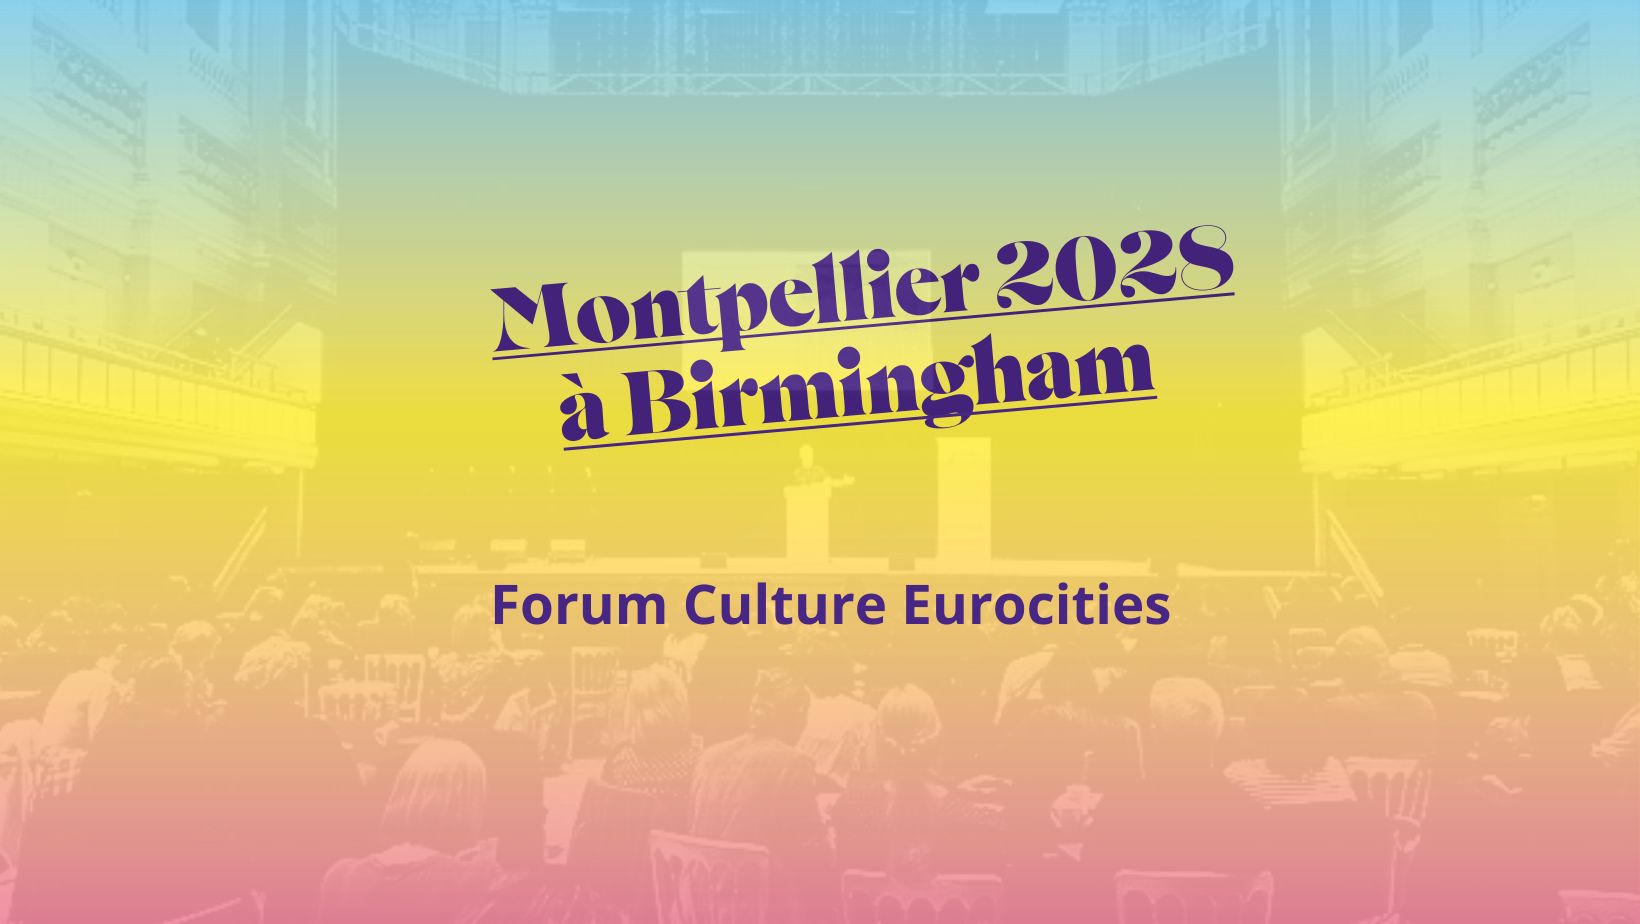 Montpellier 2028 at the Eurocities Culture Forum in Birmingham!